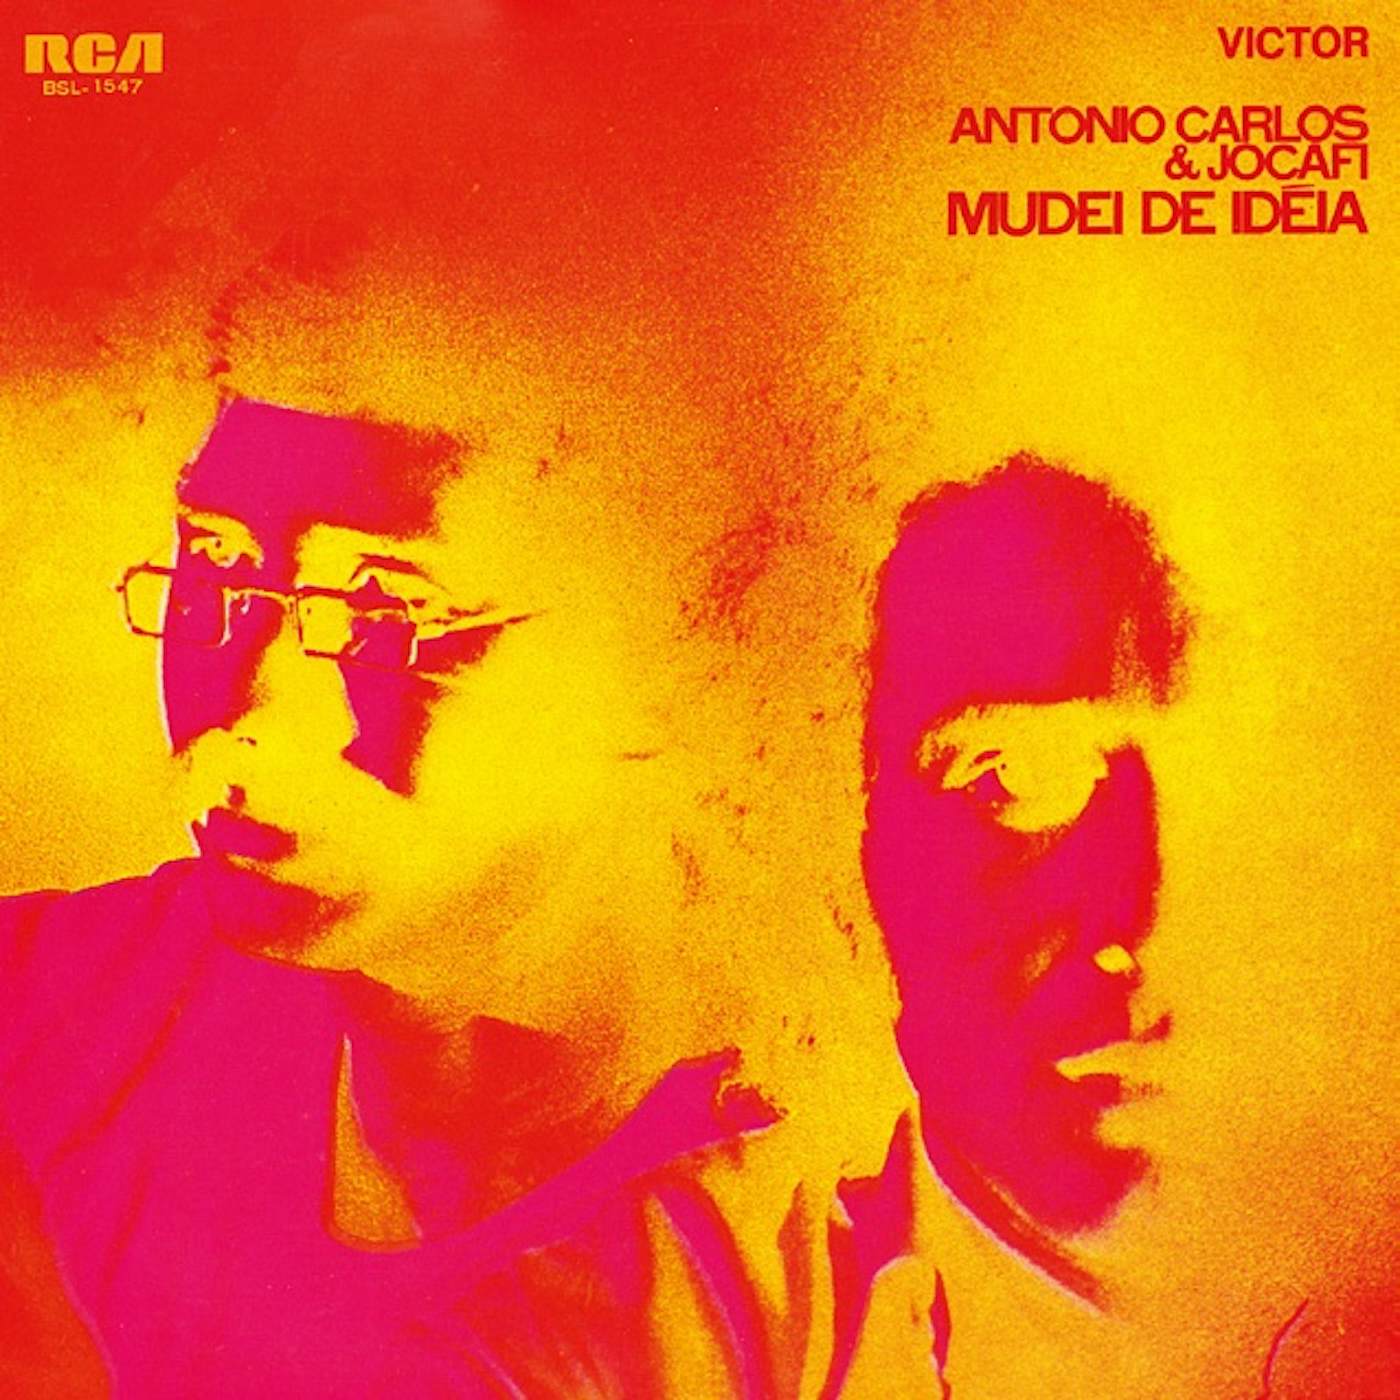 Antonio Carlos & Jocafi Mudei de Ideia Vinyl Record